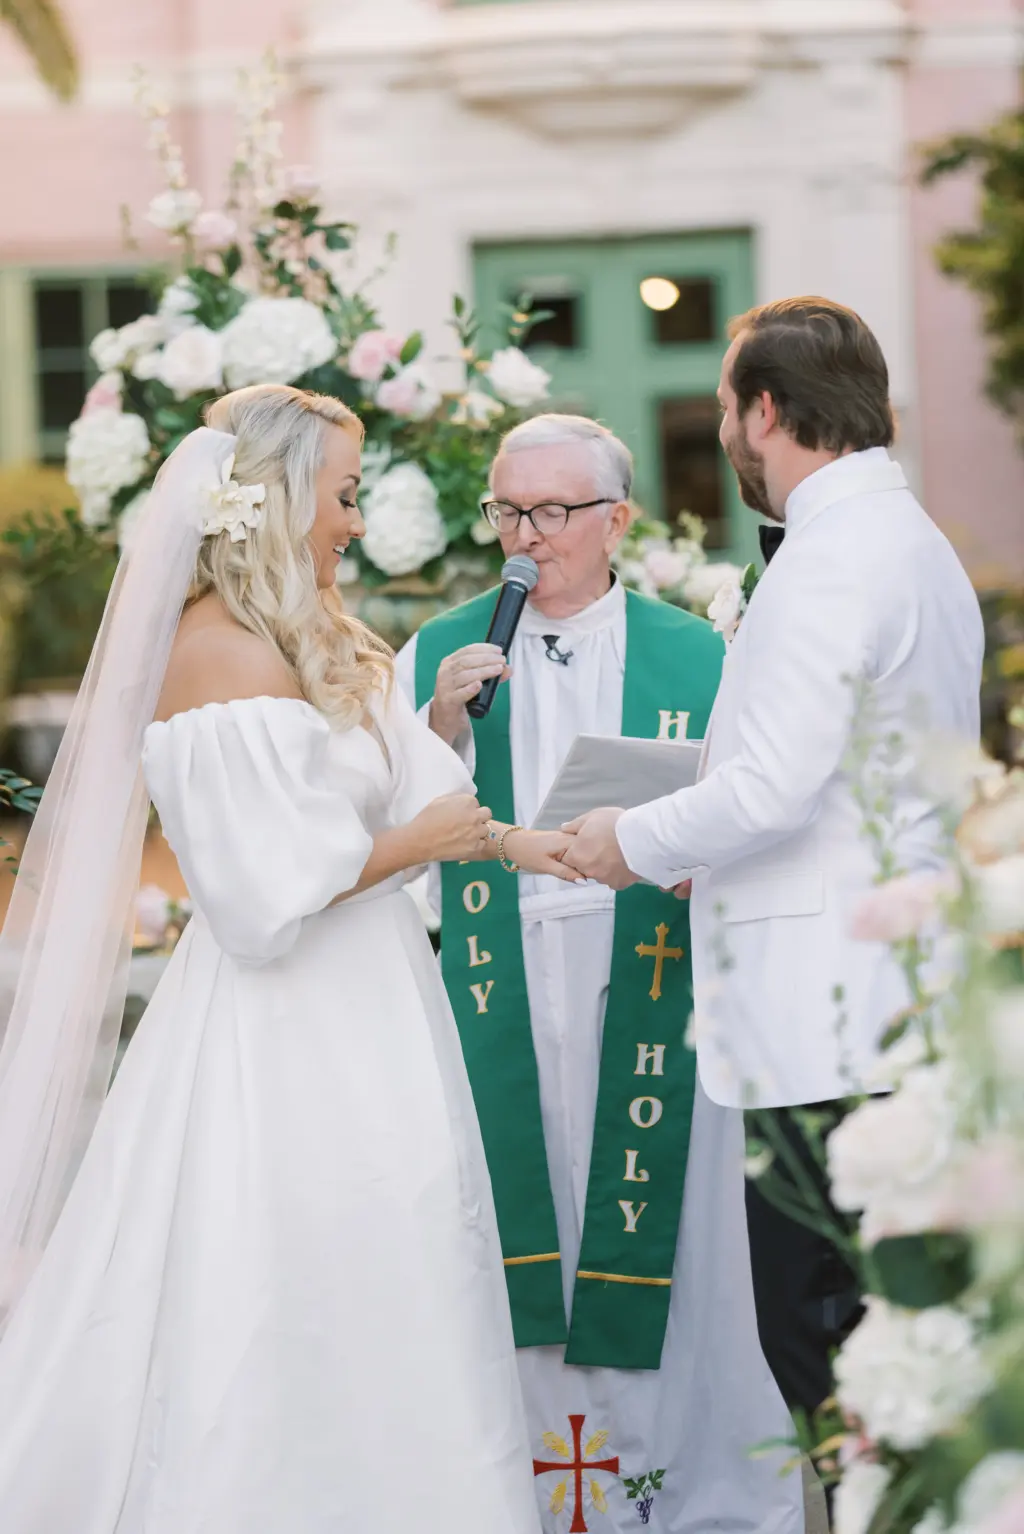 Bride and Groom Vow Exchange | Religious Wedding Ceremony Inspiration